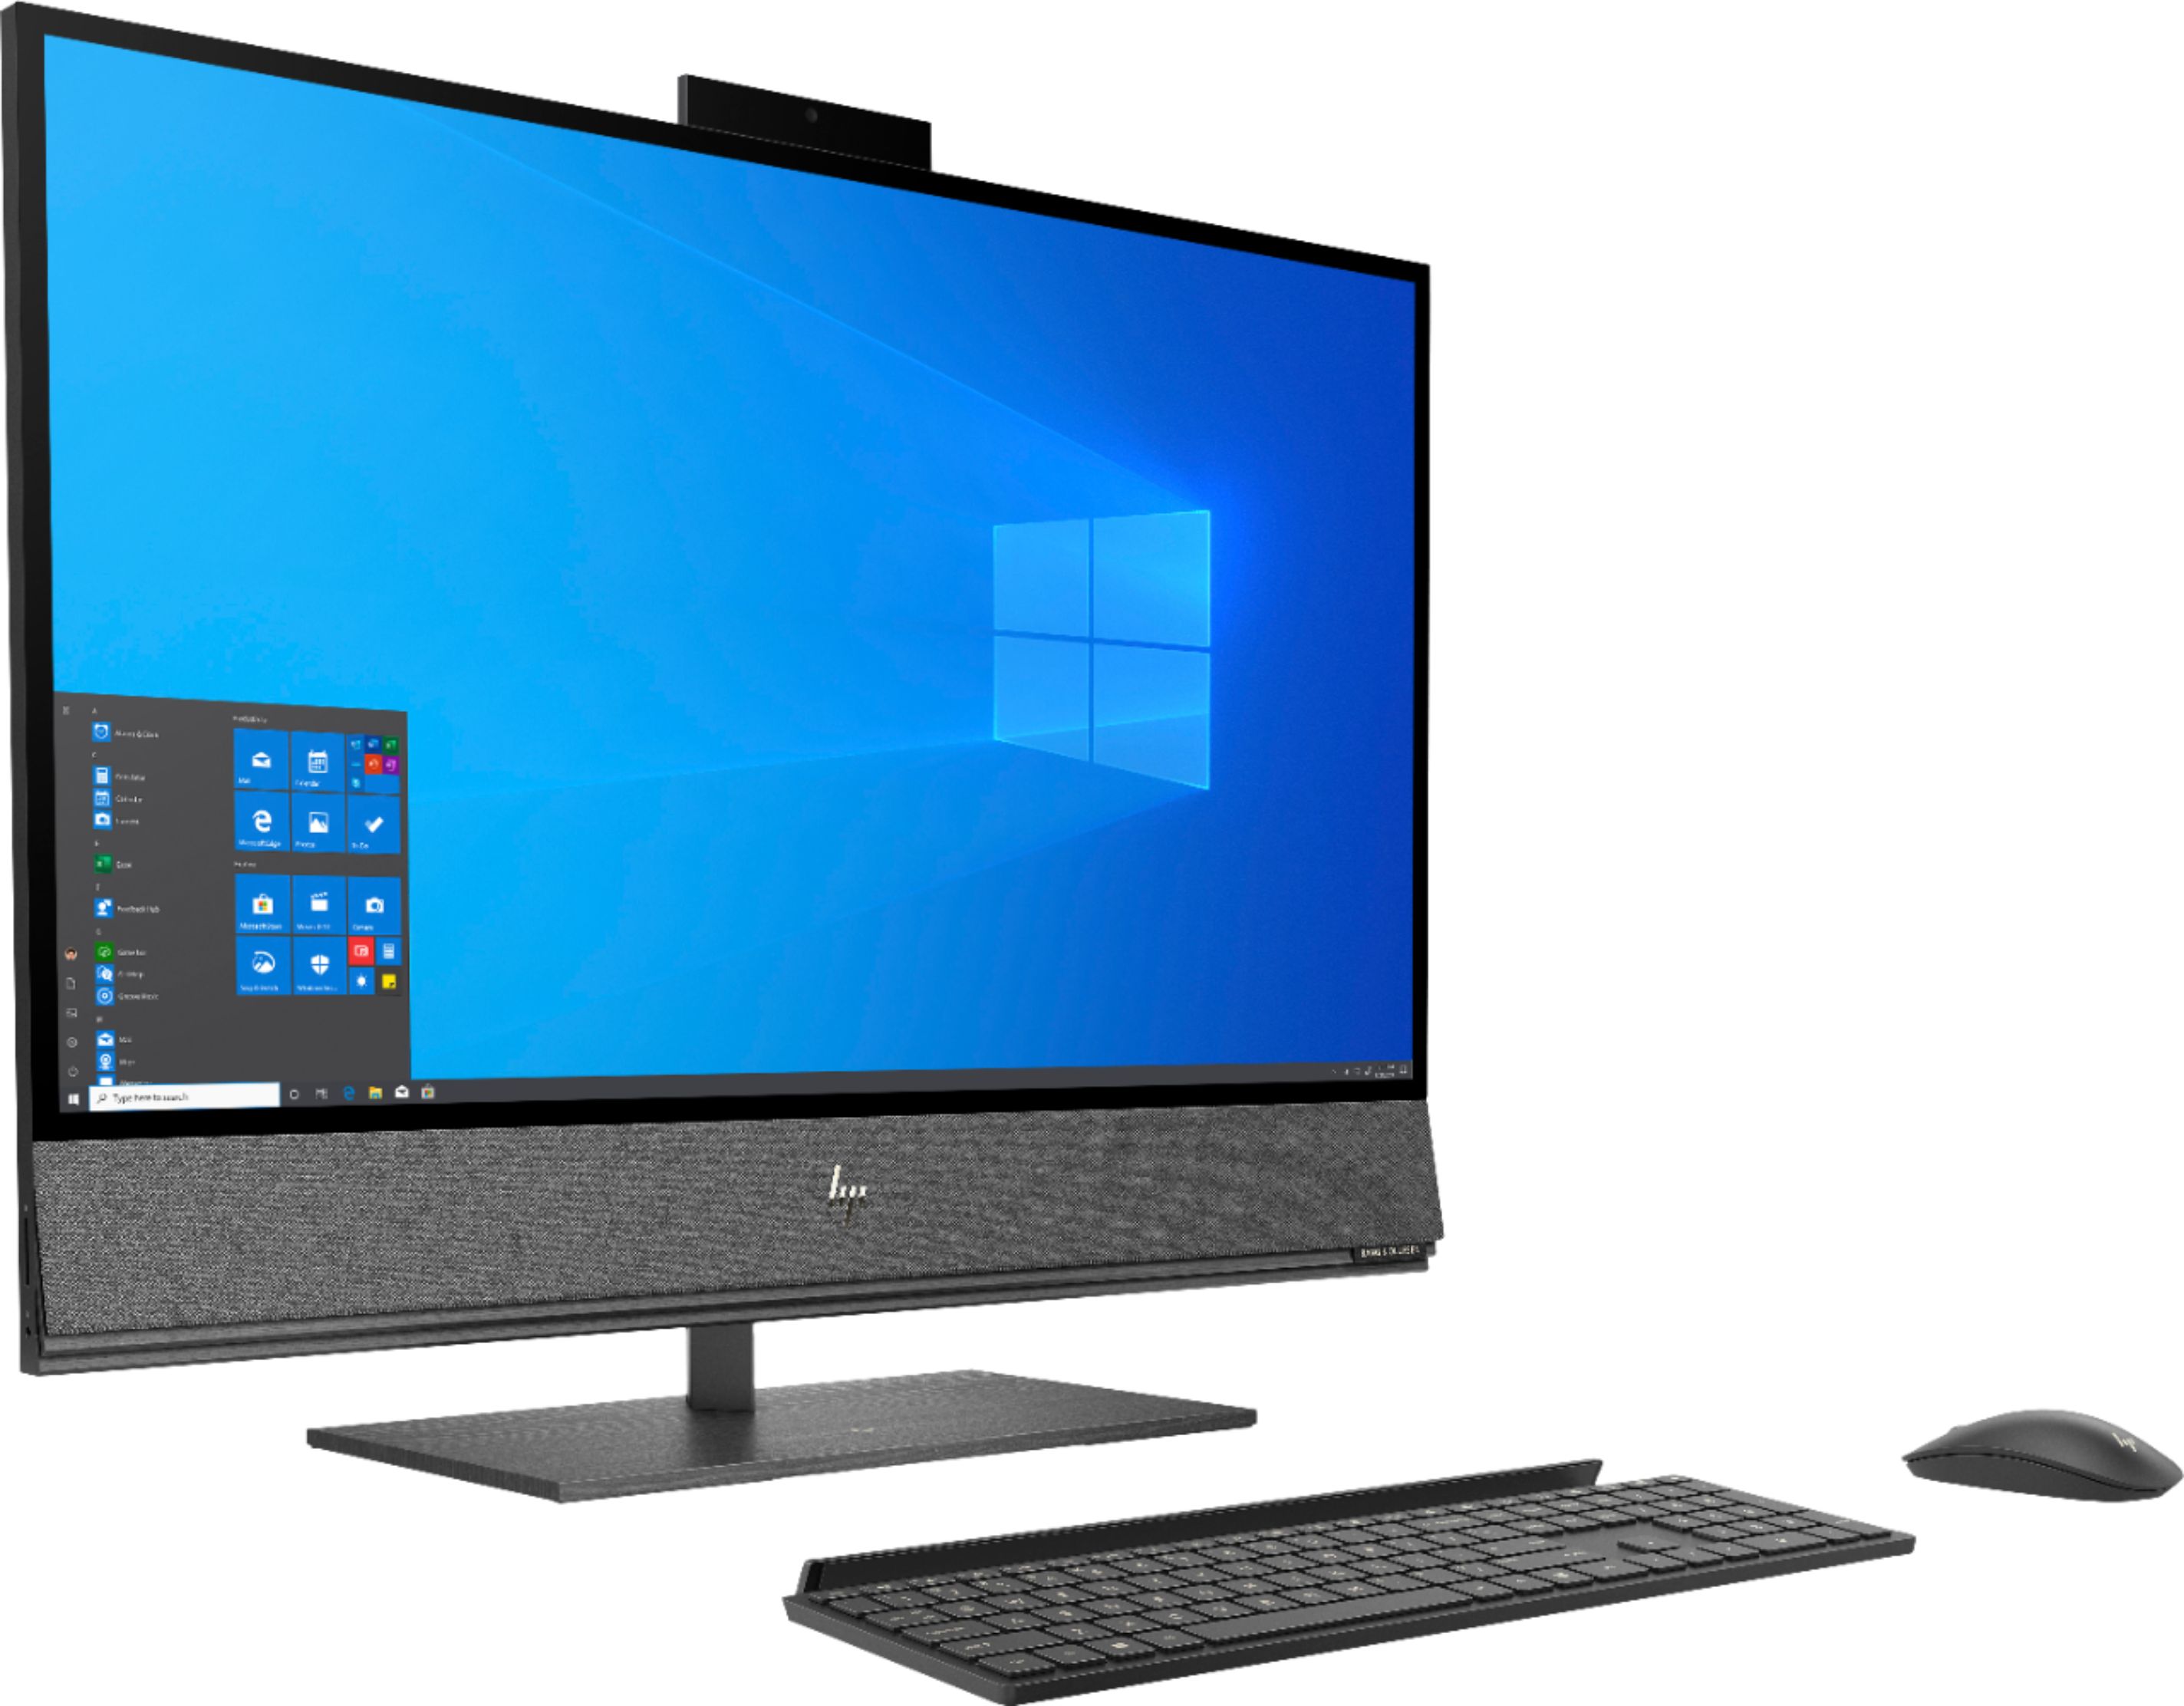 Angle View: Dell - OptiPlex Desktop - Intel Core i3 - 4GB Memory - 1TB HDD - Black